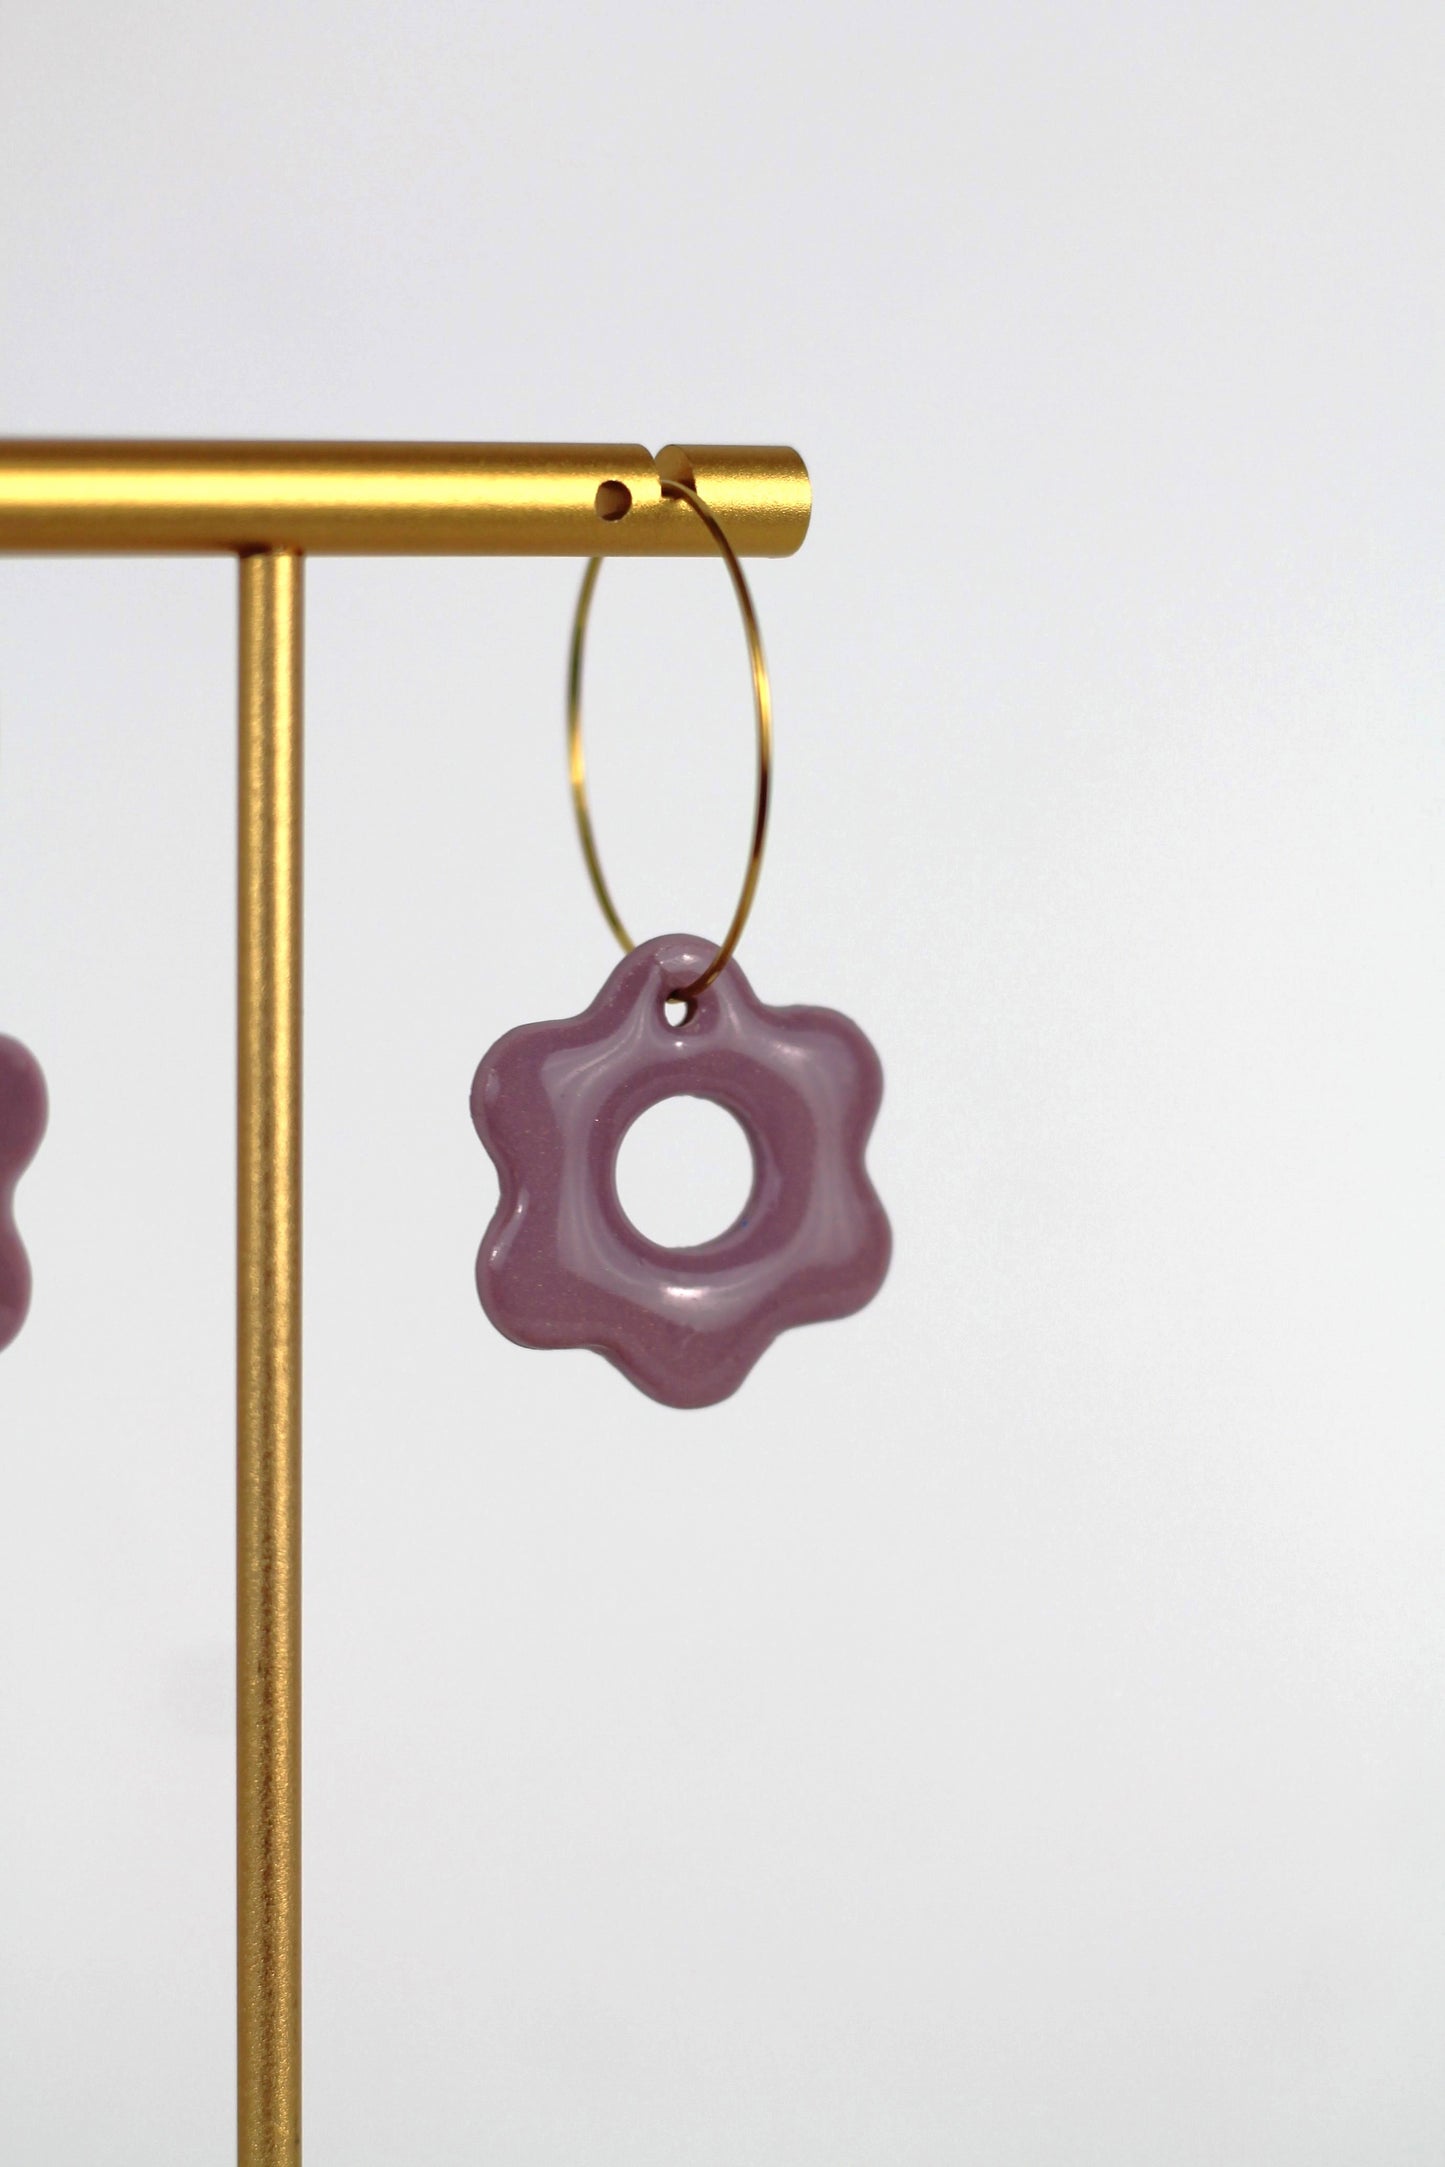 LOUISE flower earrings (charms) - Dark purple